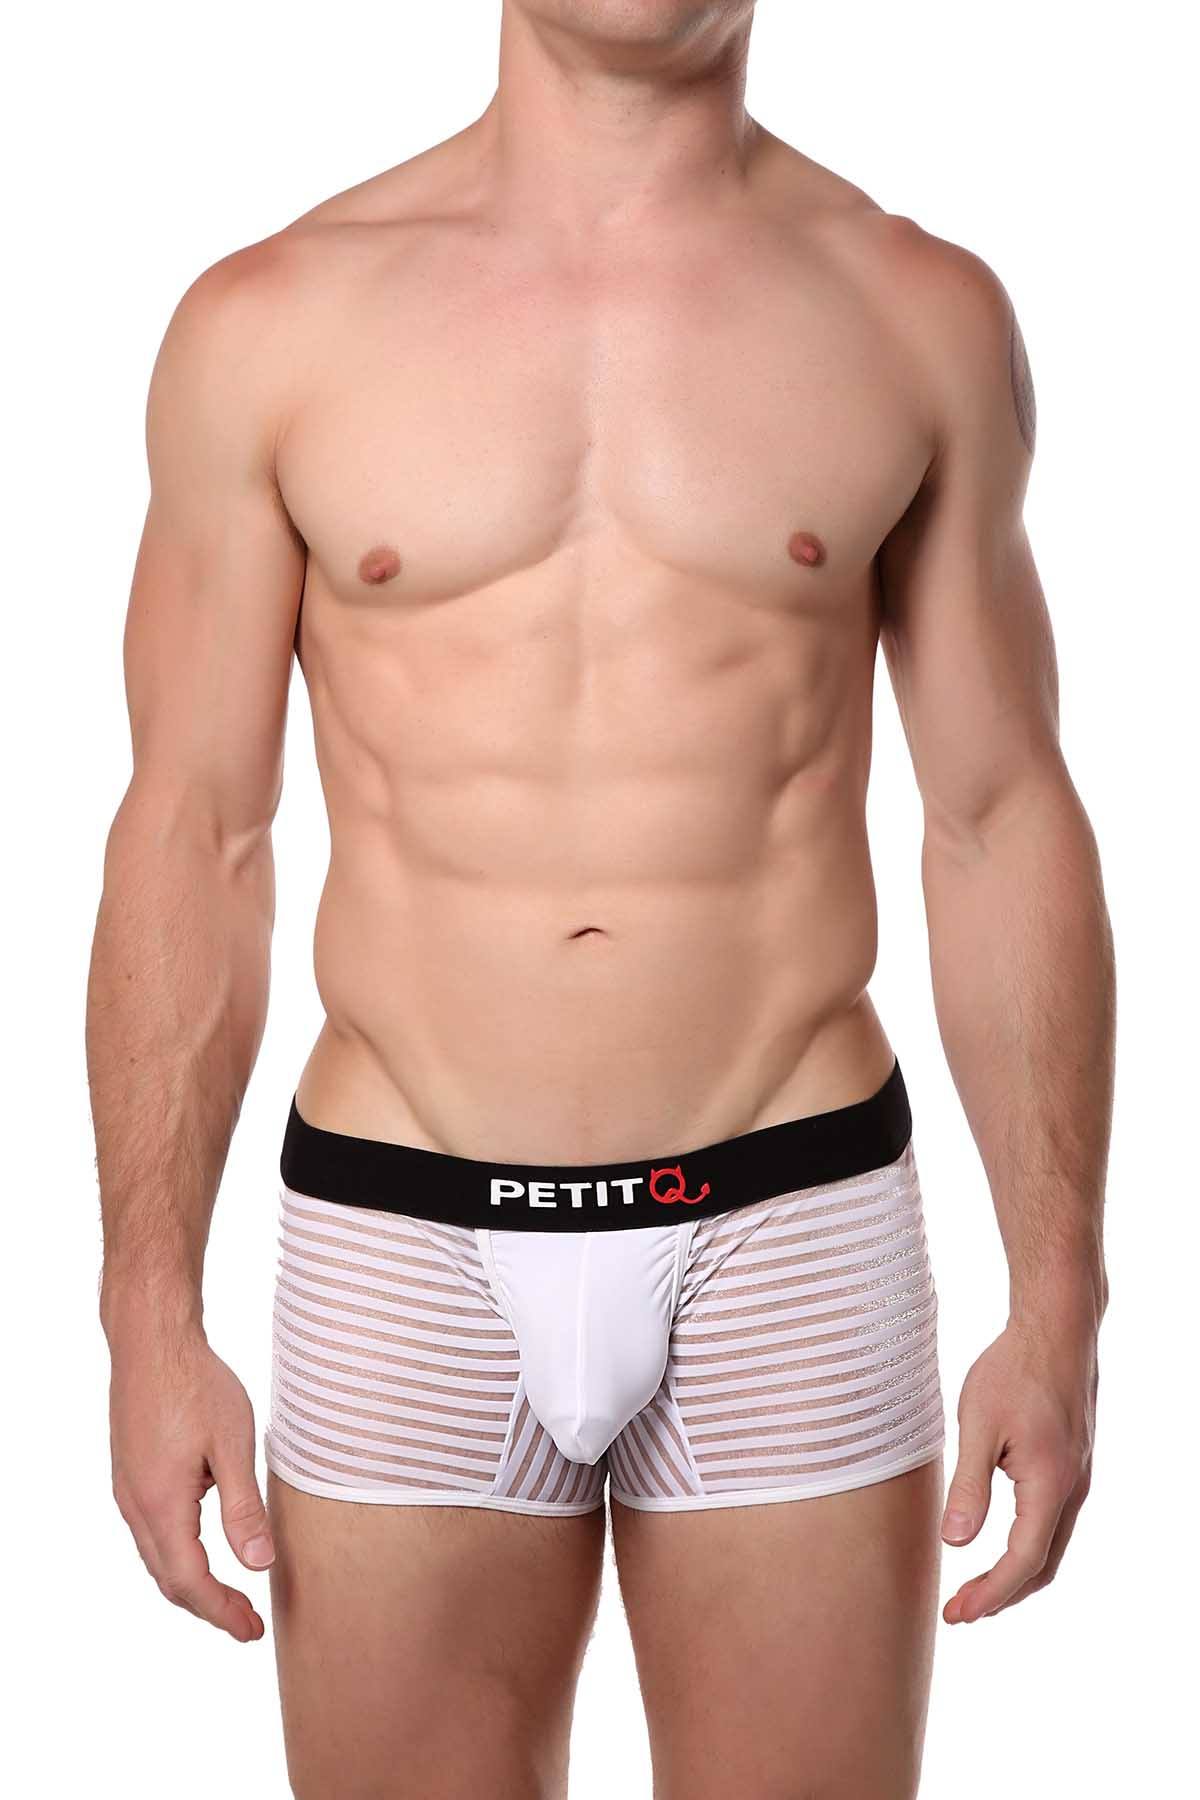 PetitQ White Big-Bulge Boxer Brief